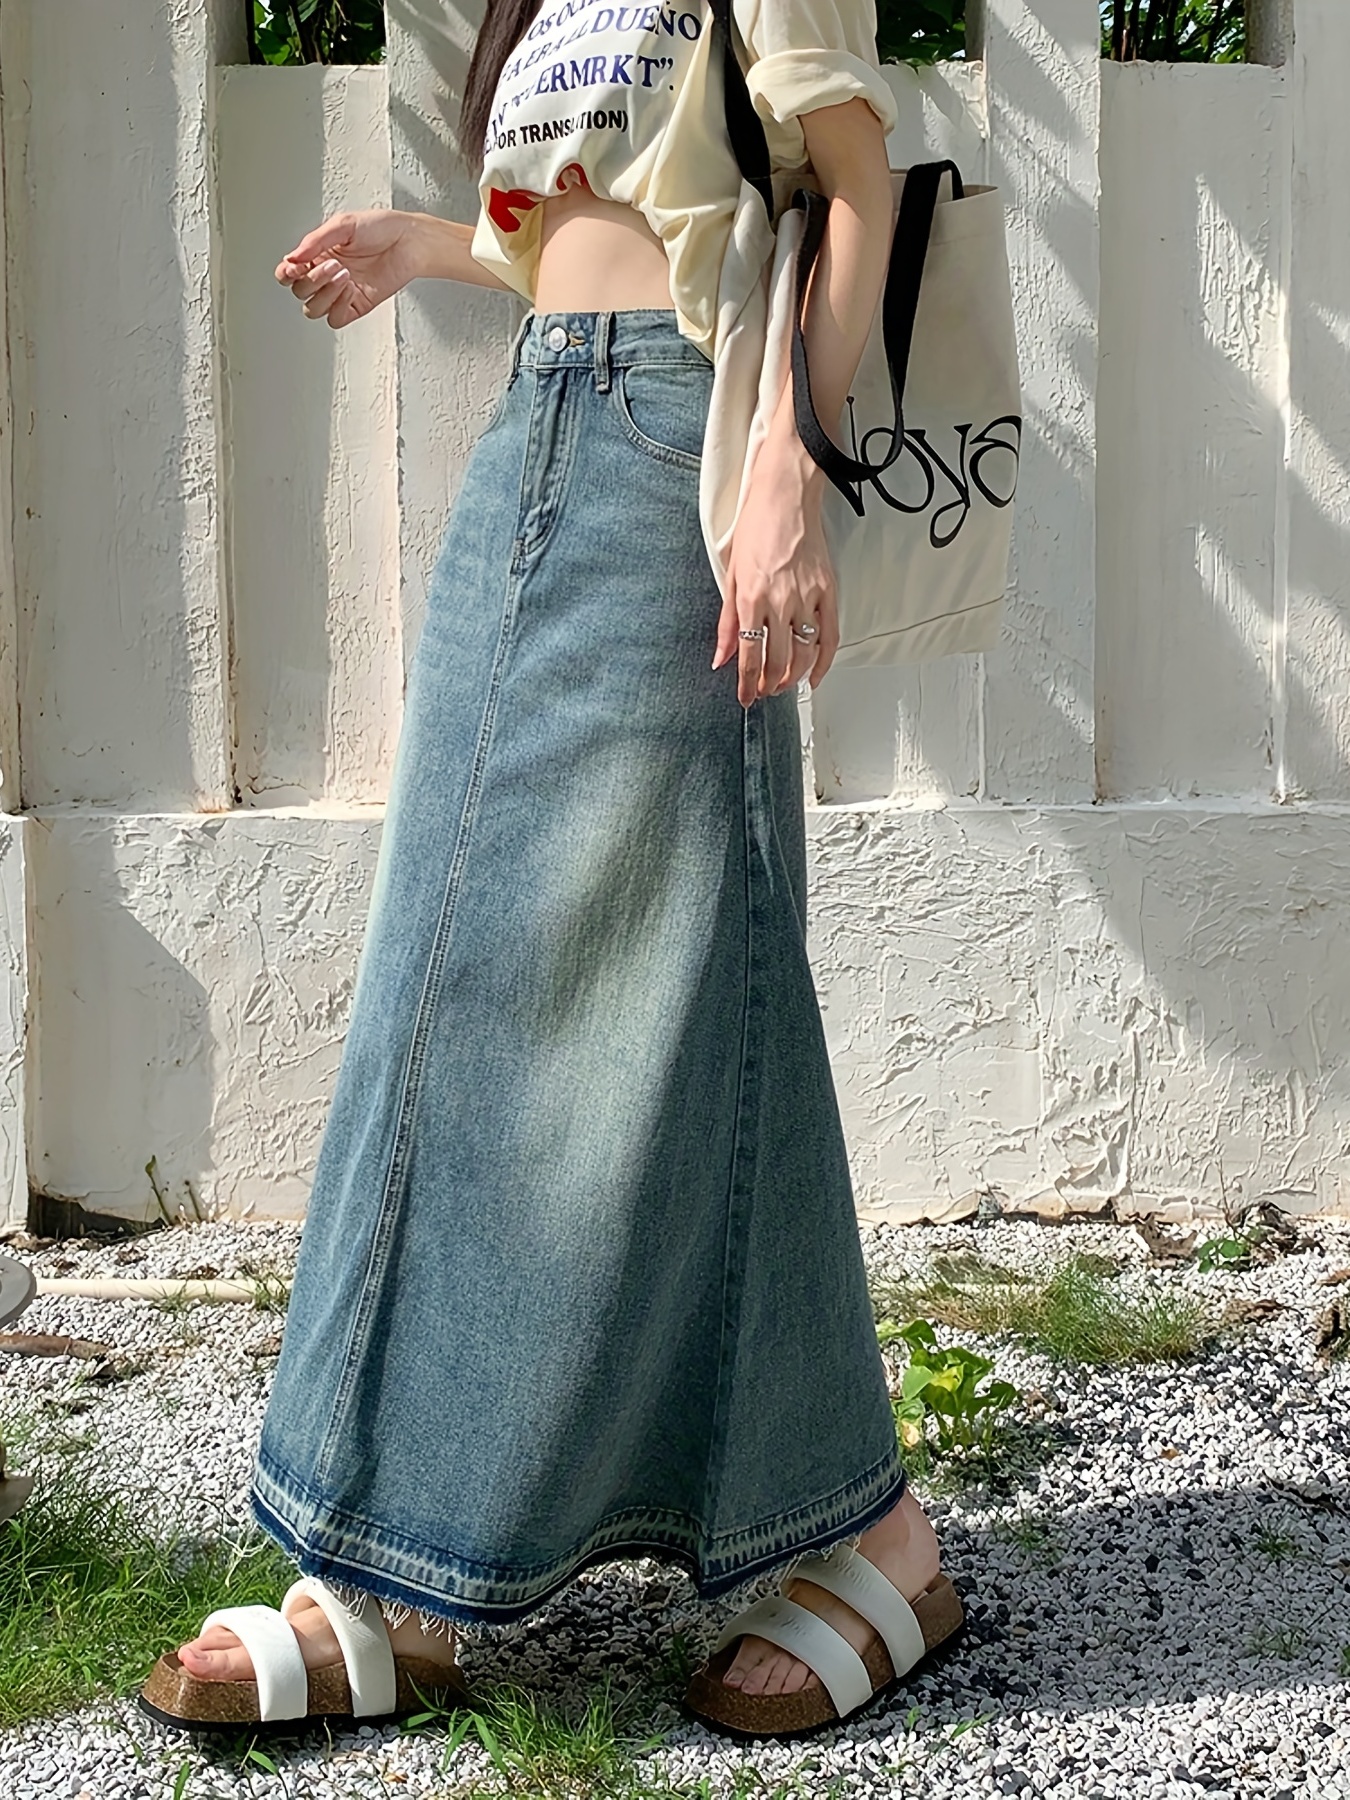 Midi Denim Skirt / Blue